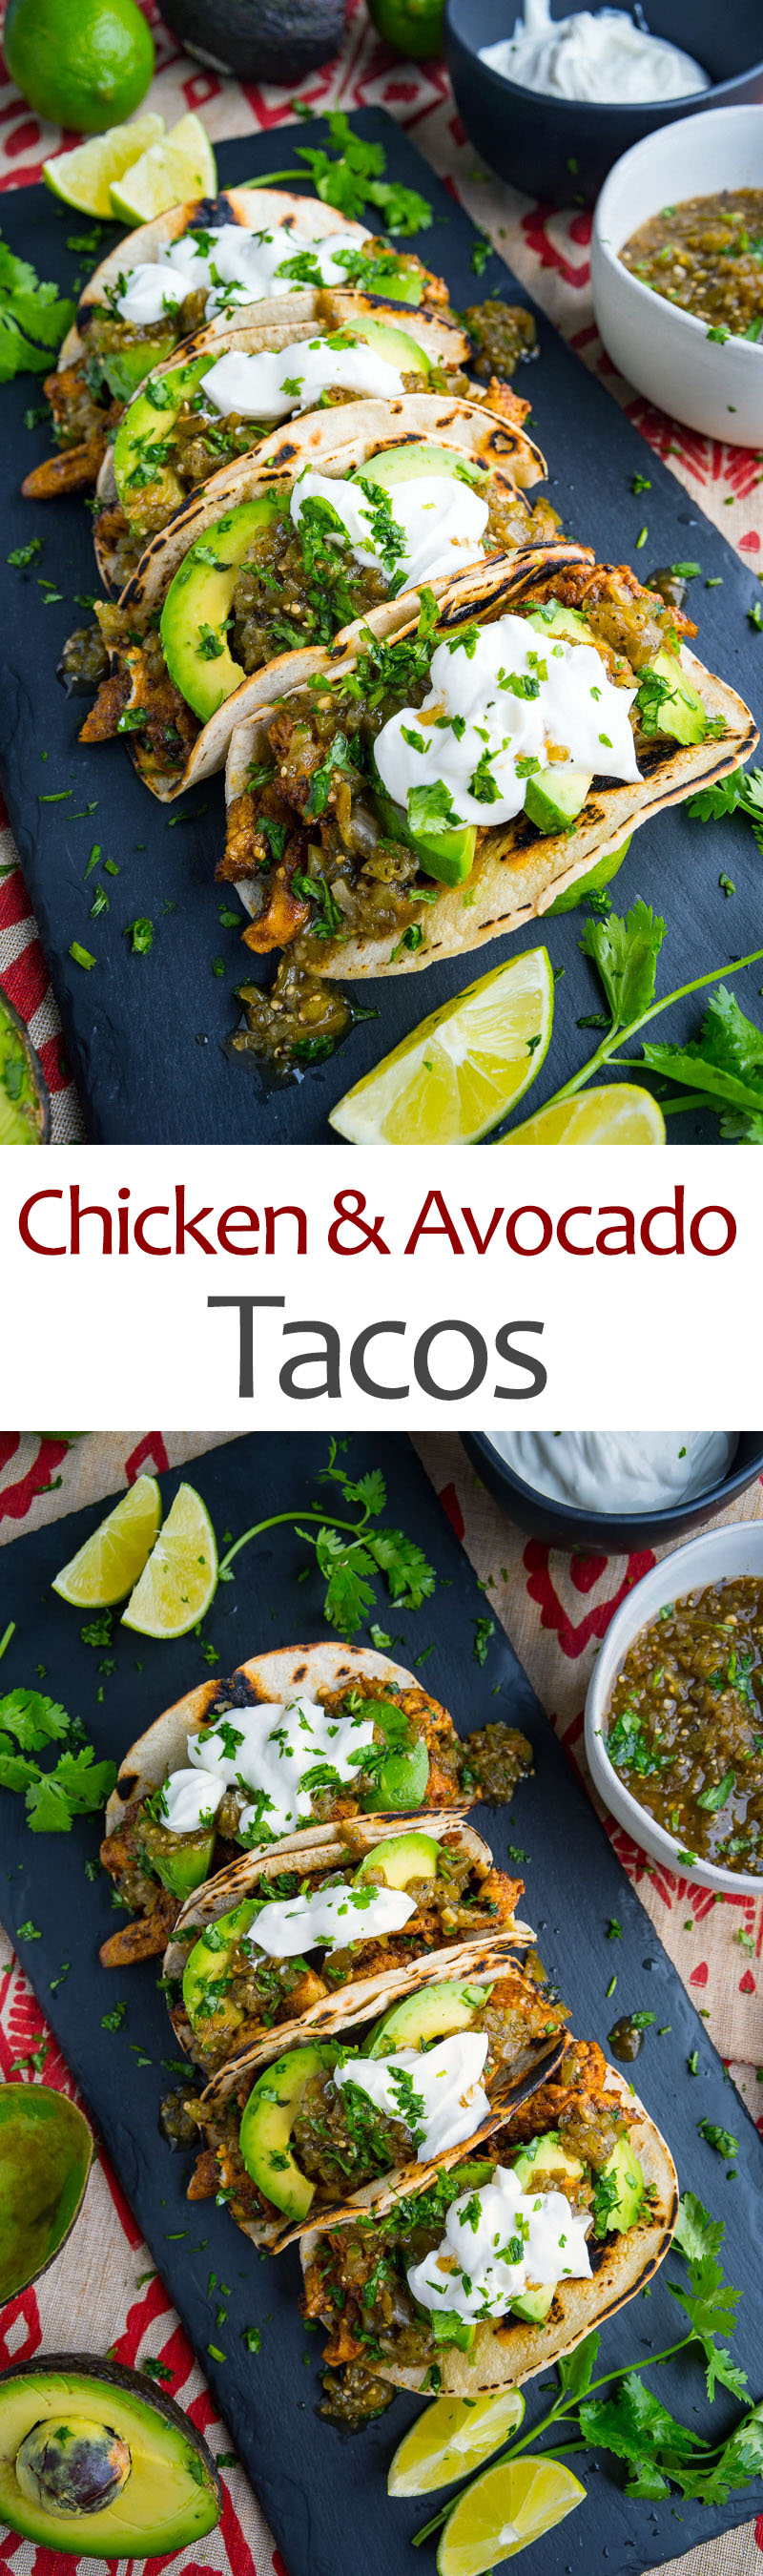 Chicken and Avocado Tacos